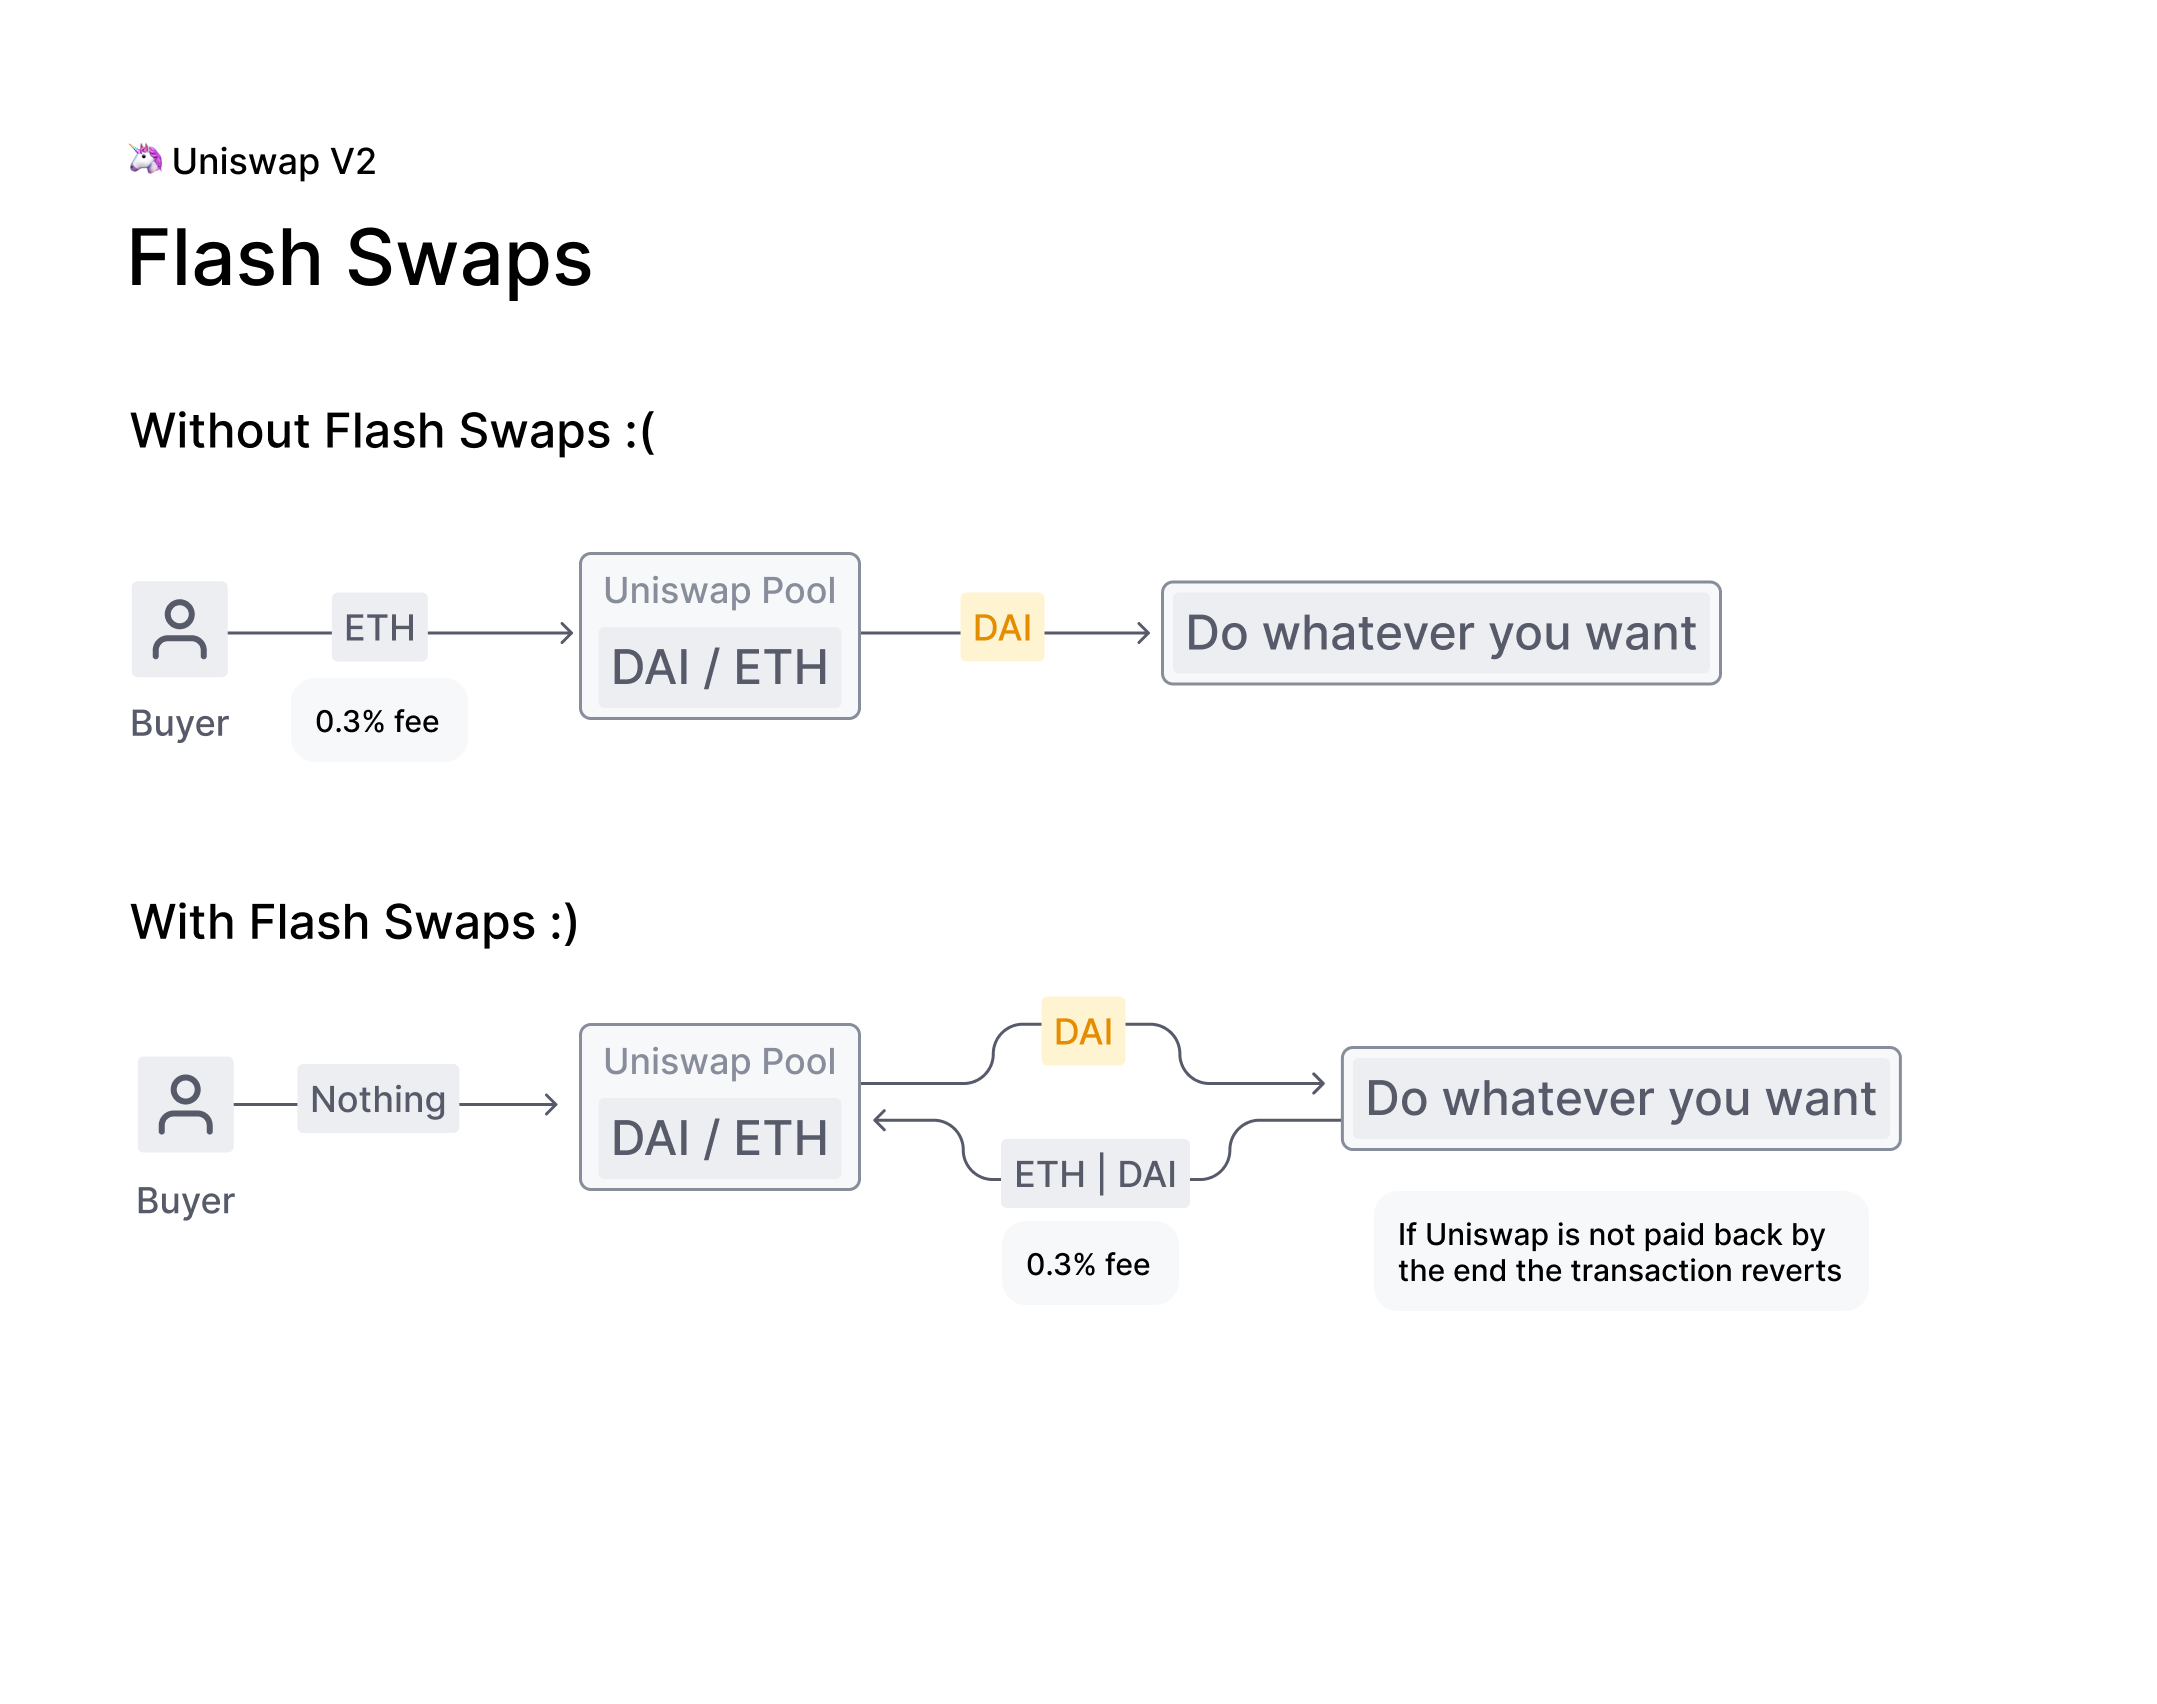 Version 2 - Flash Swaps